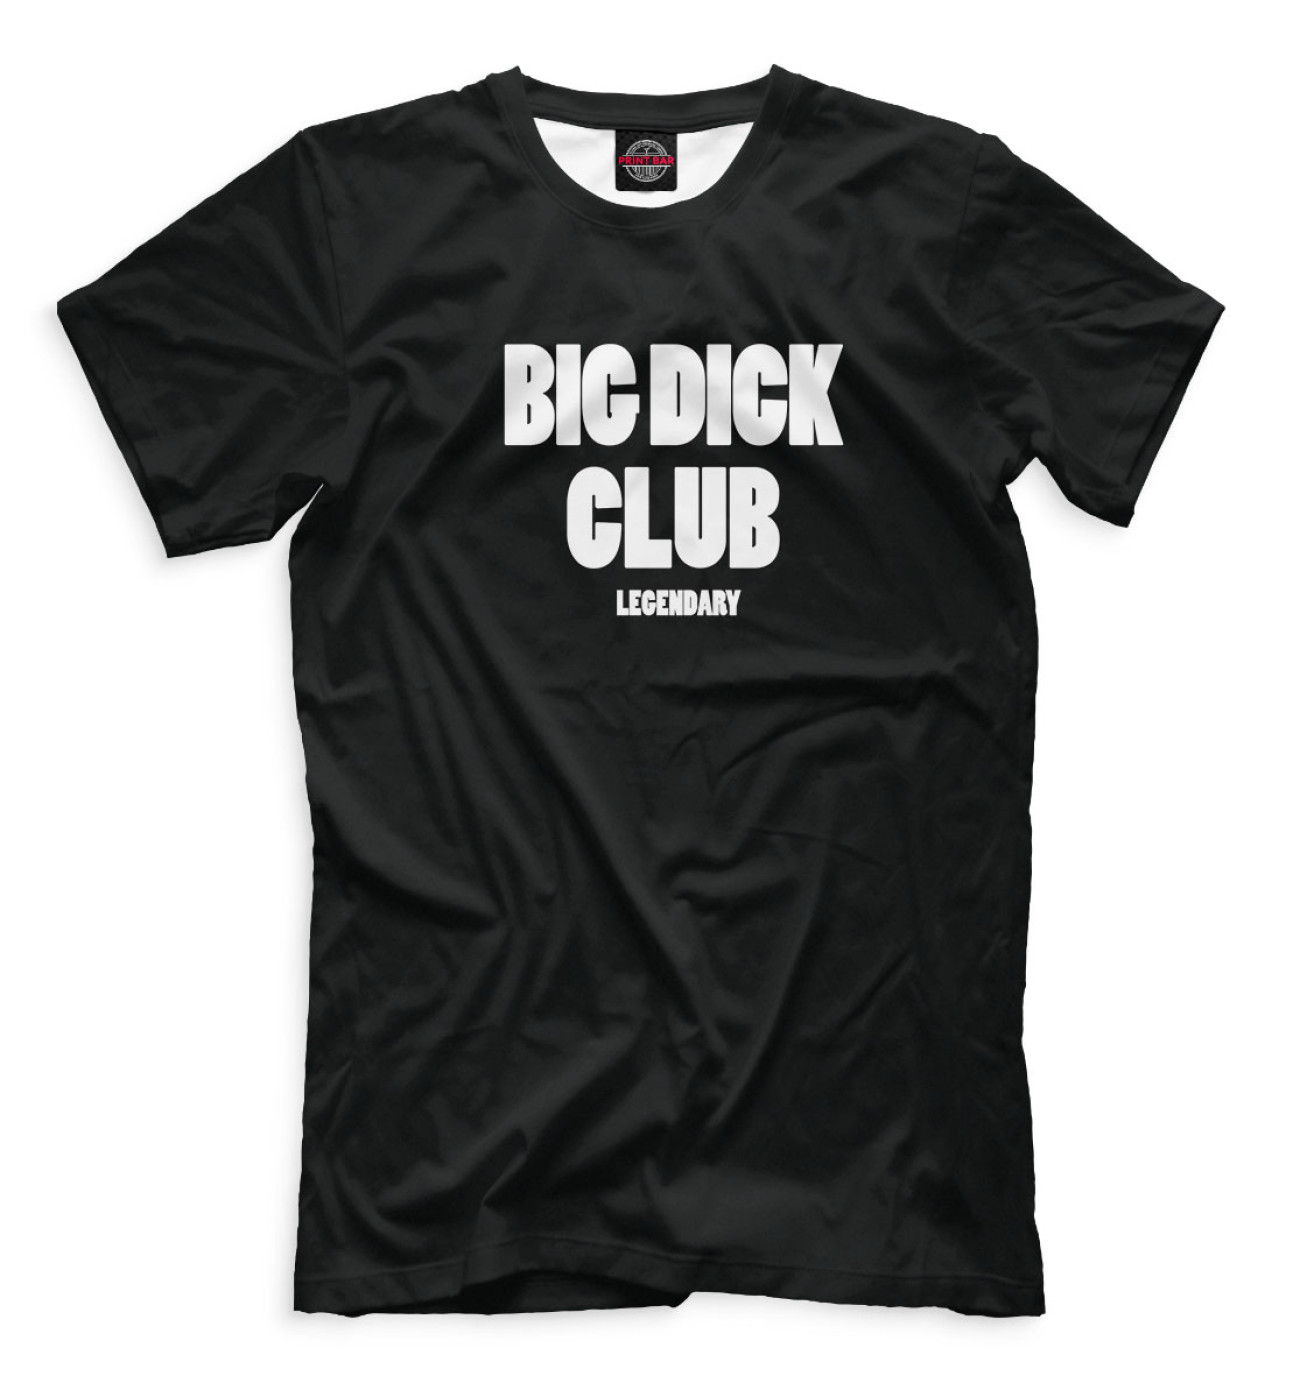 Мужская Футболка Bic Dick Club, артикул: BLO-193747-fut-2